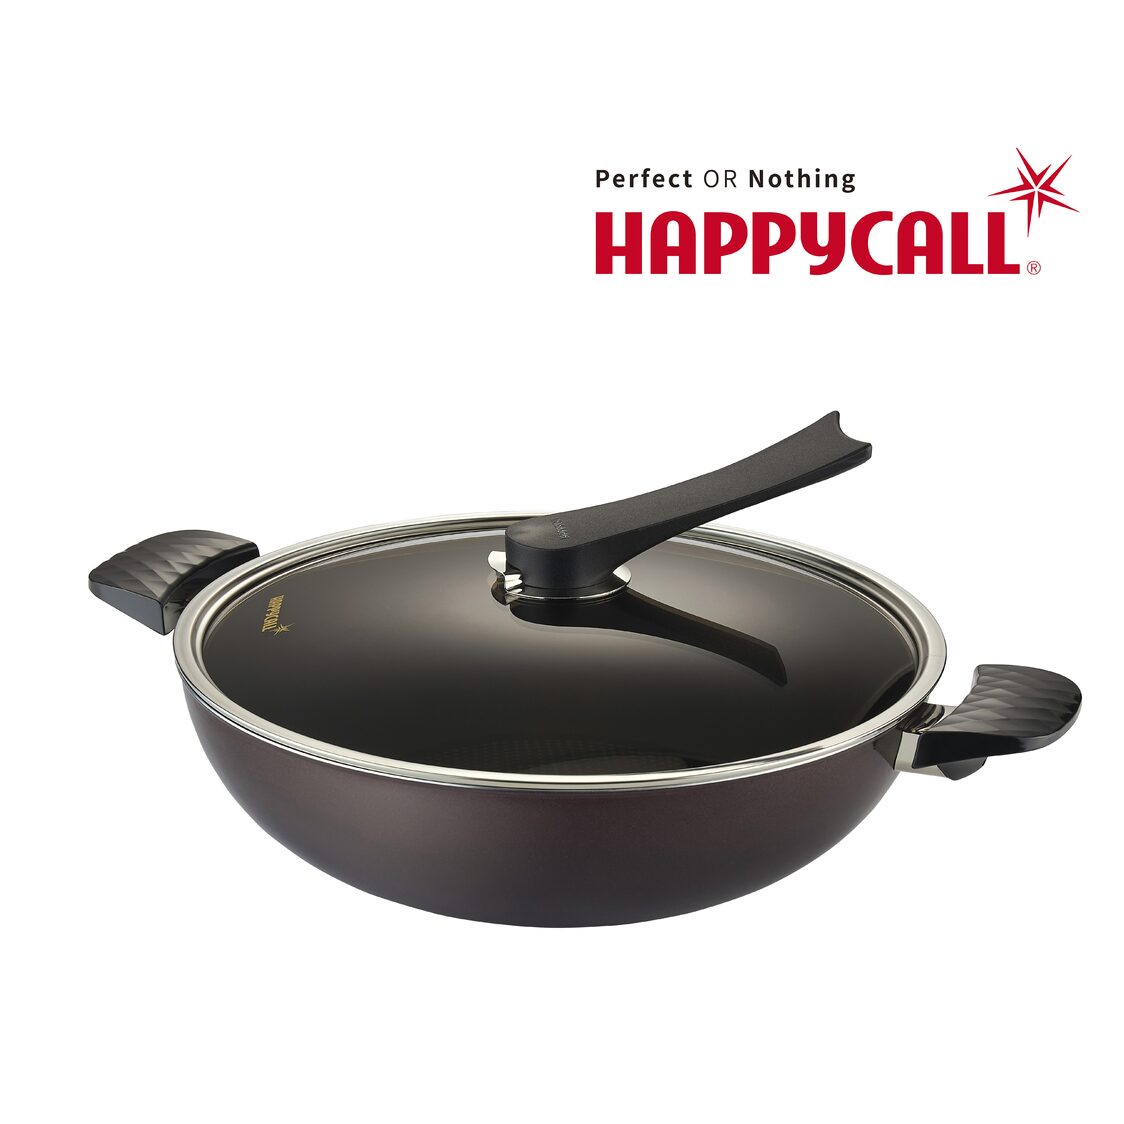 Happycall 8 IH Diamond Lite Frying Pan